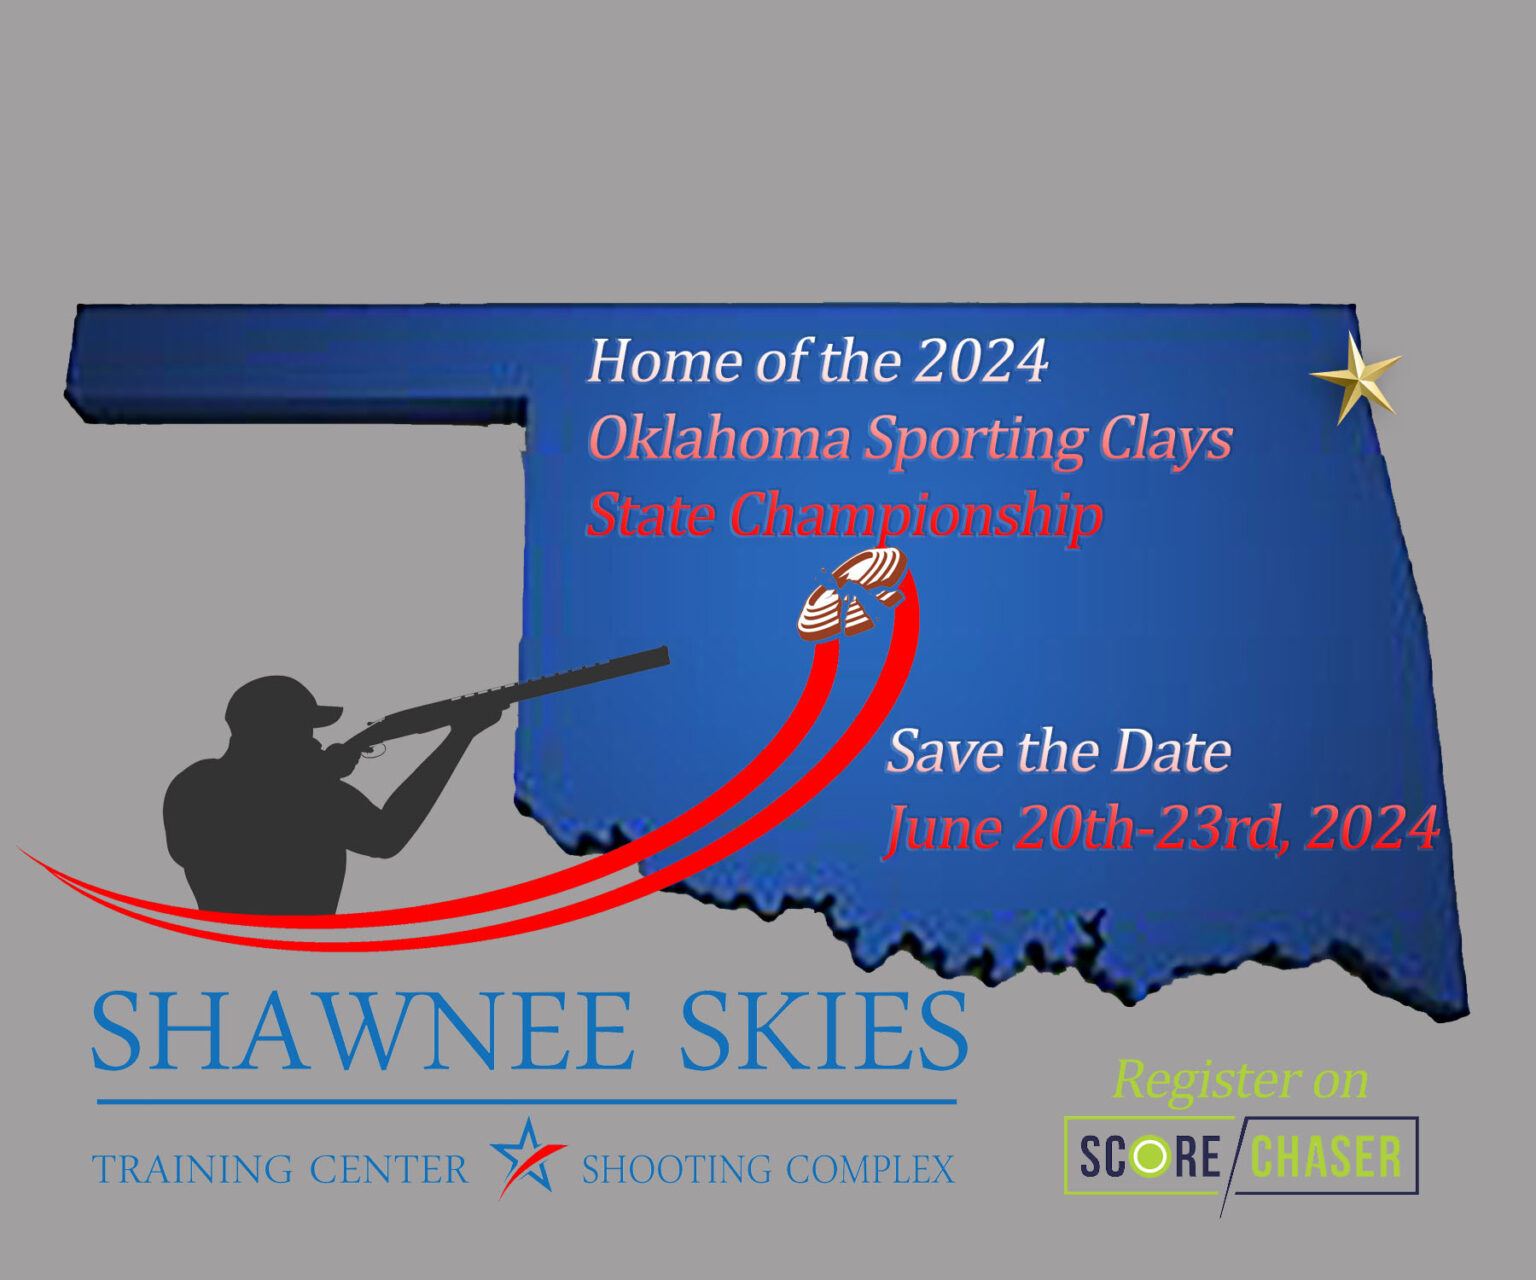 2024 Oklahoma Sporting Clays State Championship Shawnee Skies